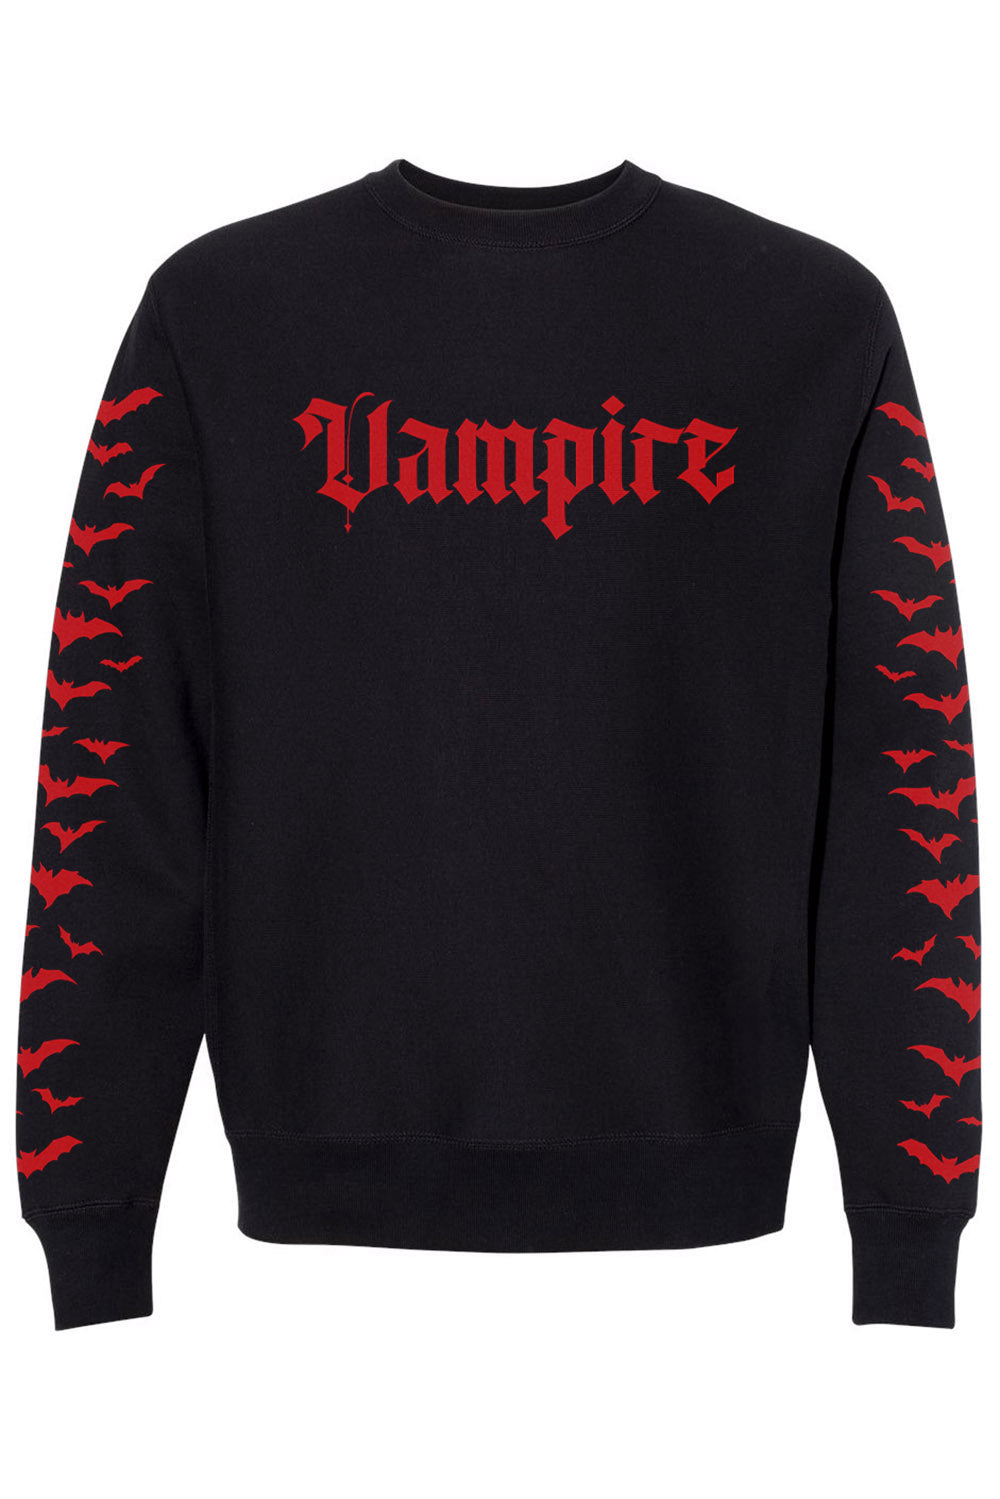 vampire epic face shirt｜TikTok Search